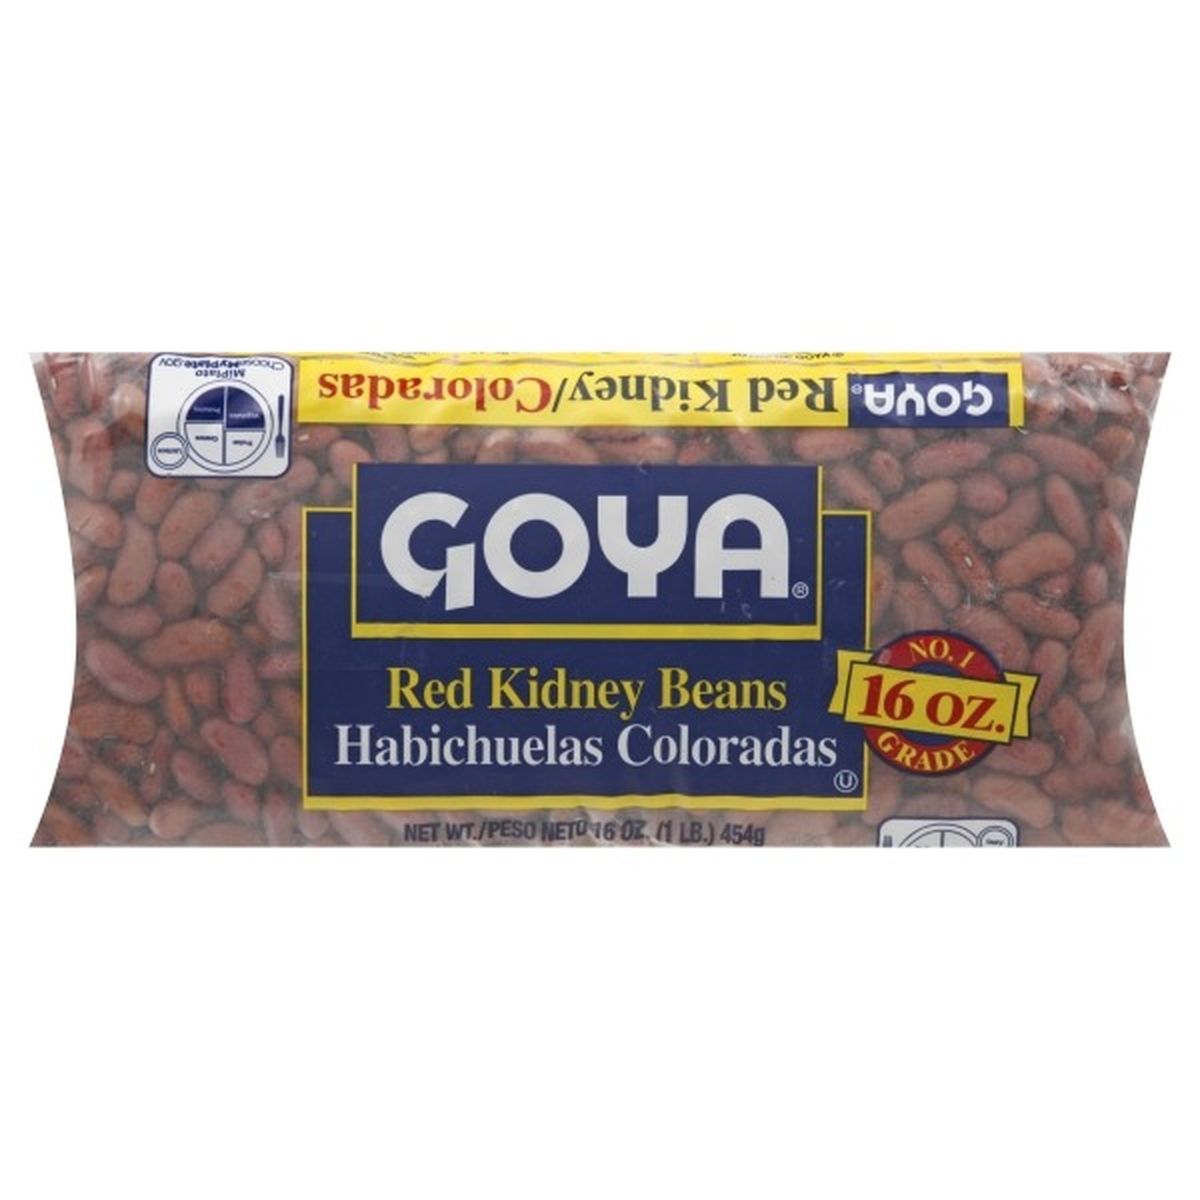 Calories in Goya Red Kidney Beans